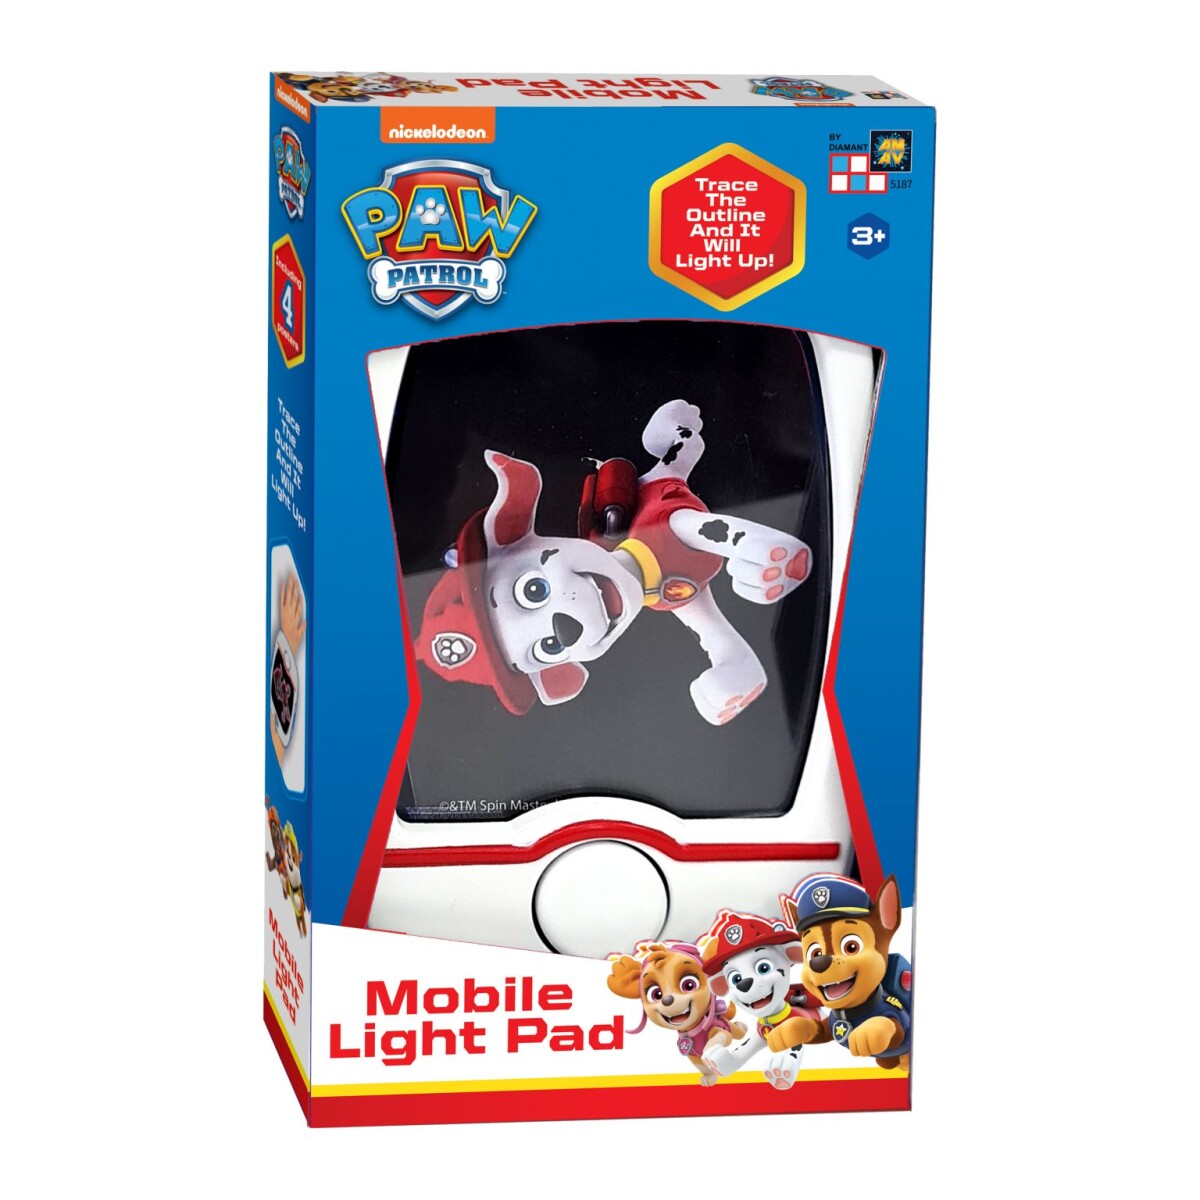 Tableta Mágica Paw Patrol Mobile Light Pad - 001 